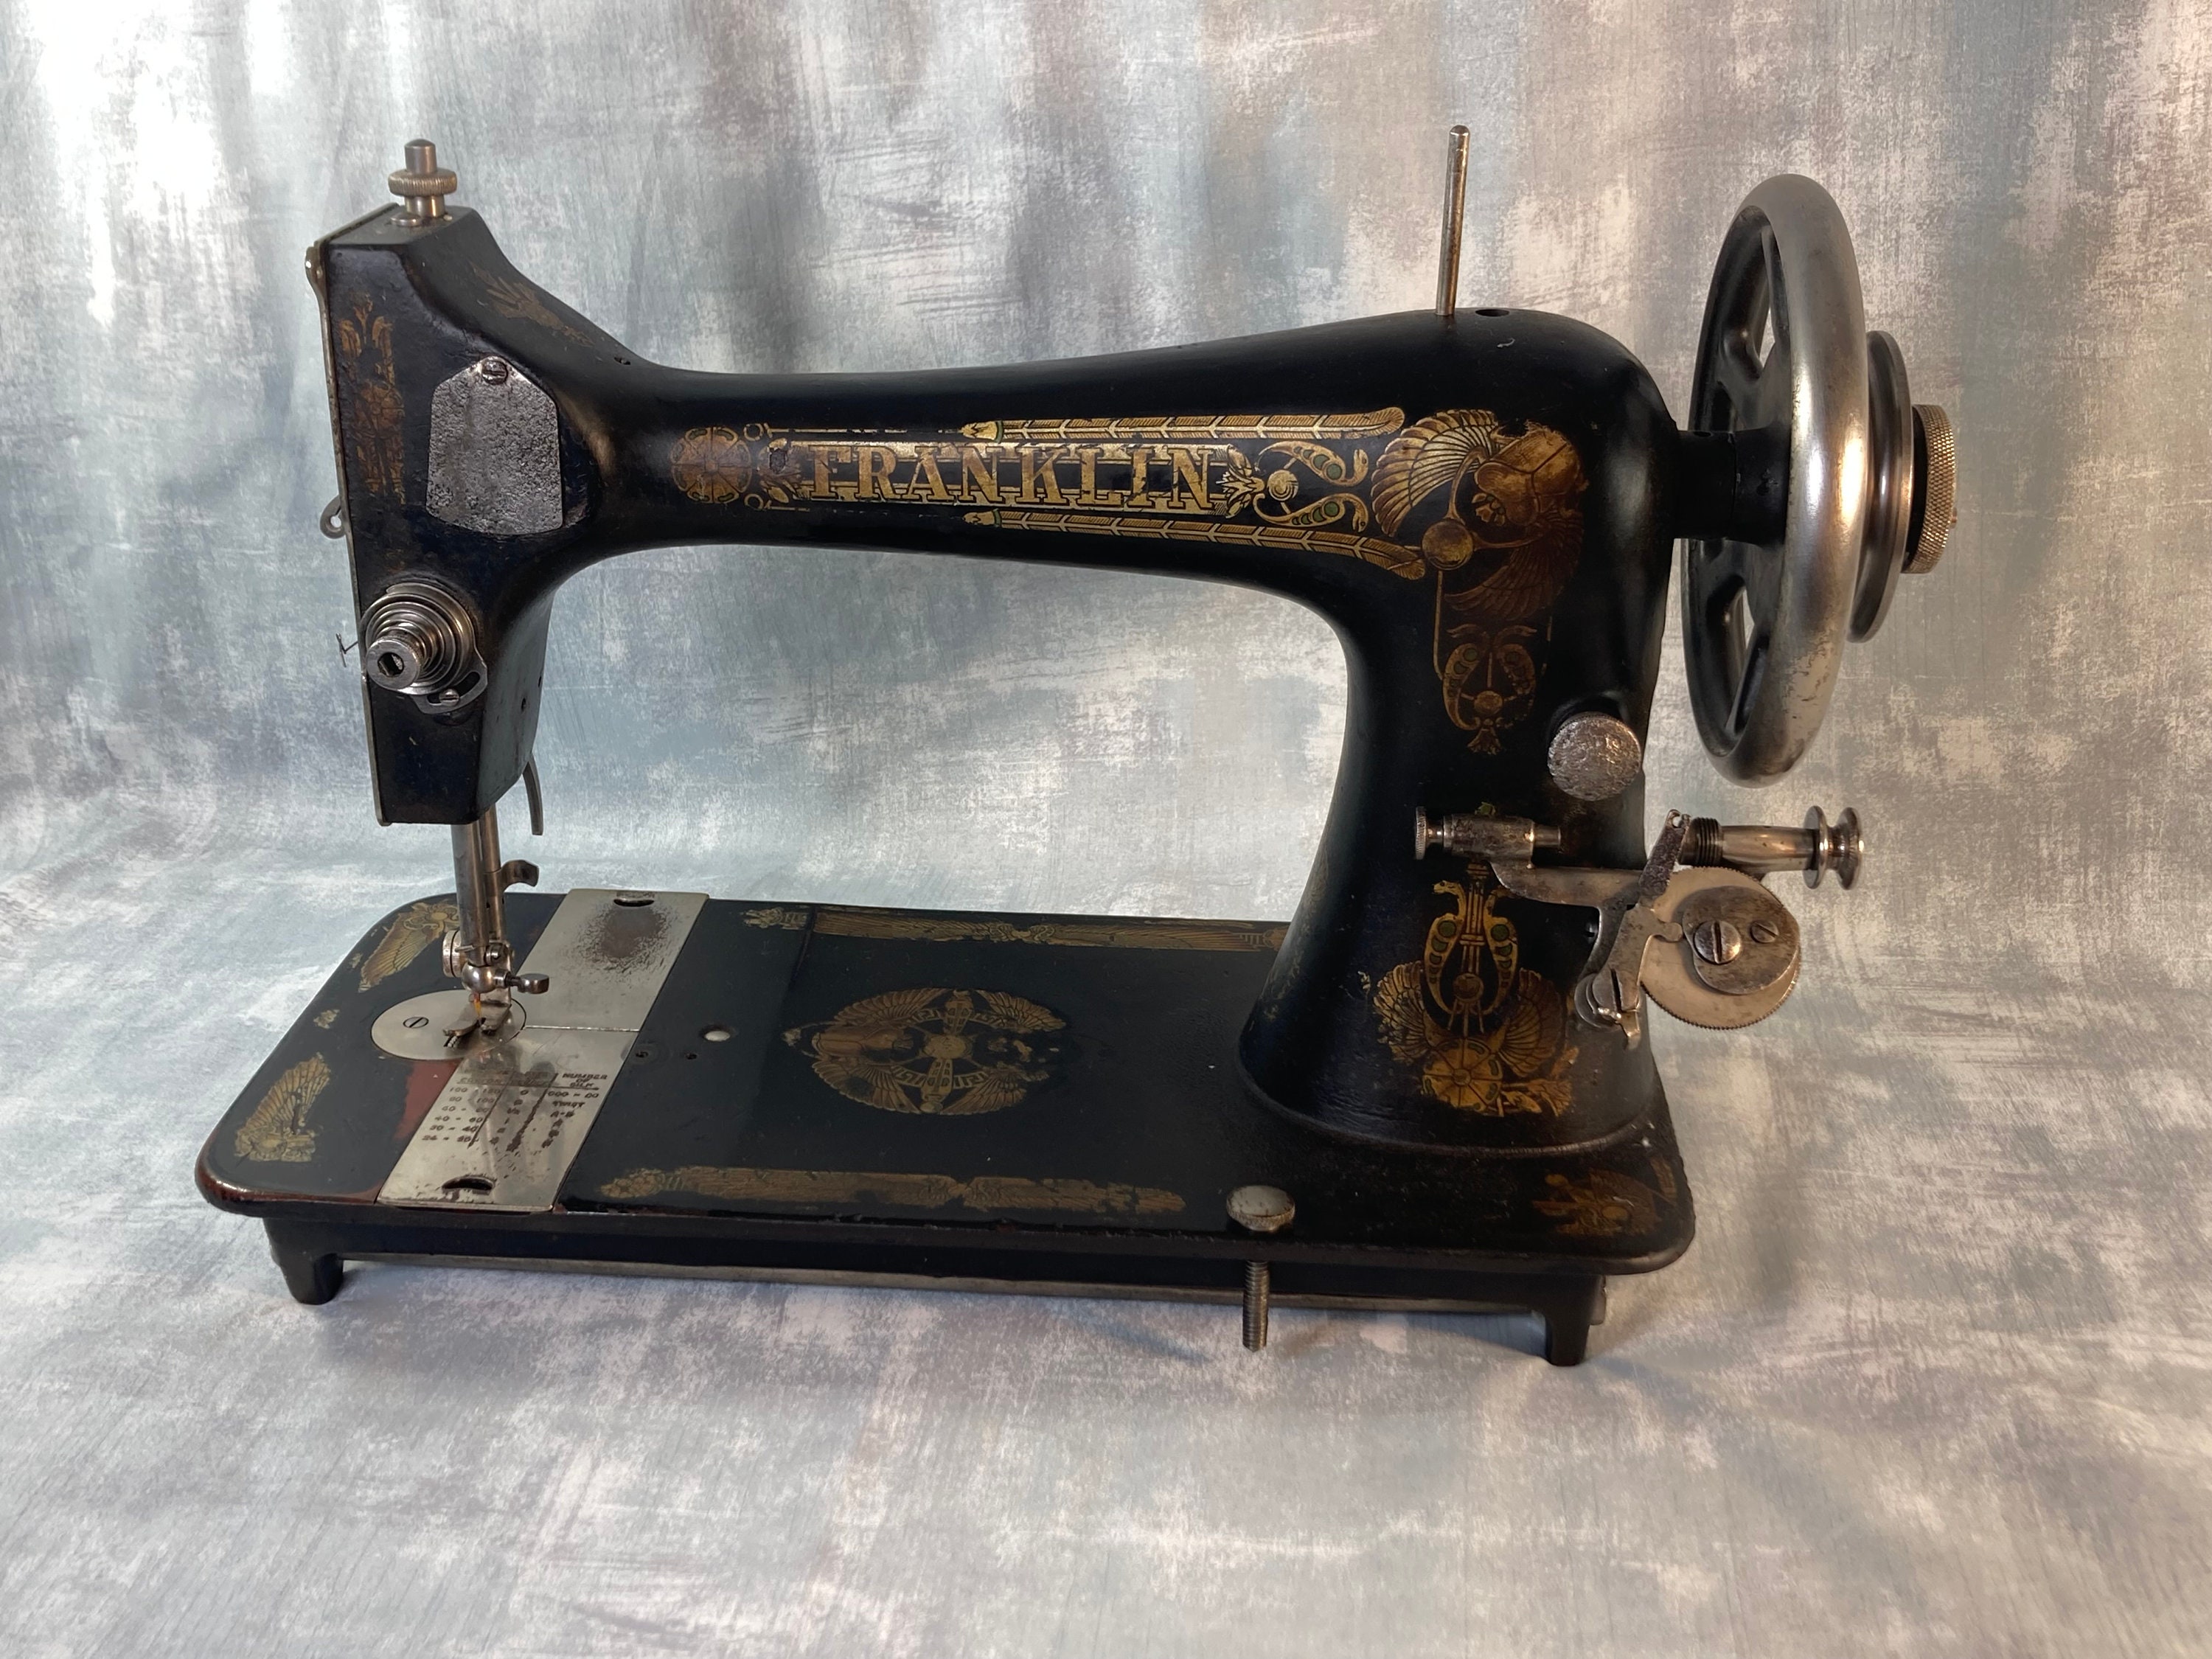 Ornate Vintage Pedal Sewing Machine